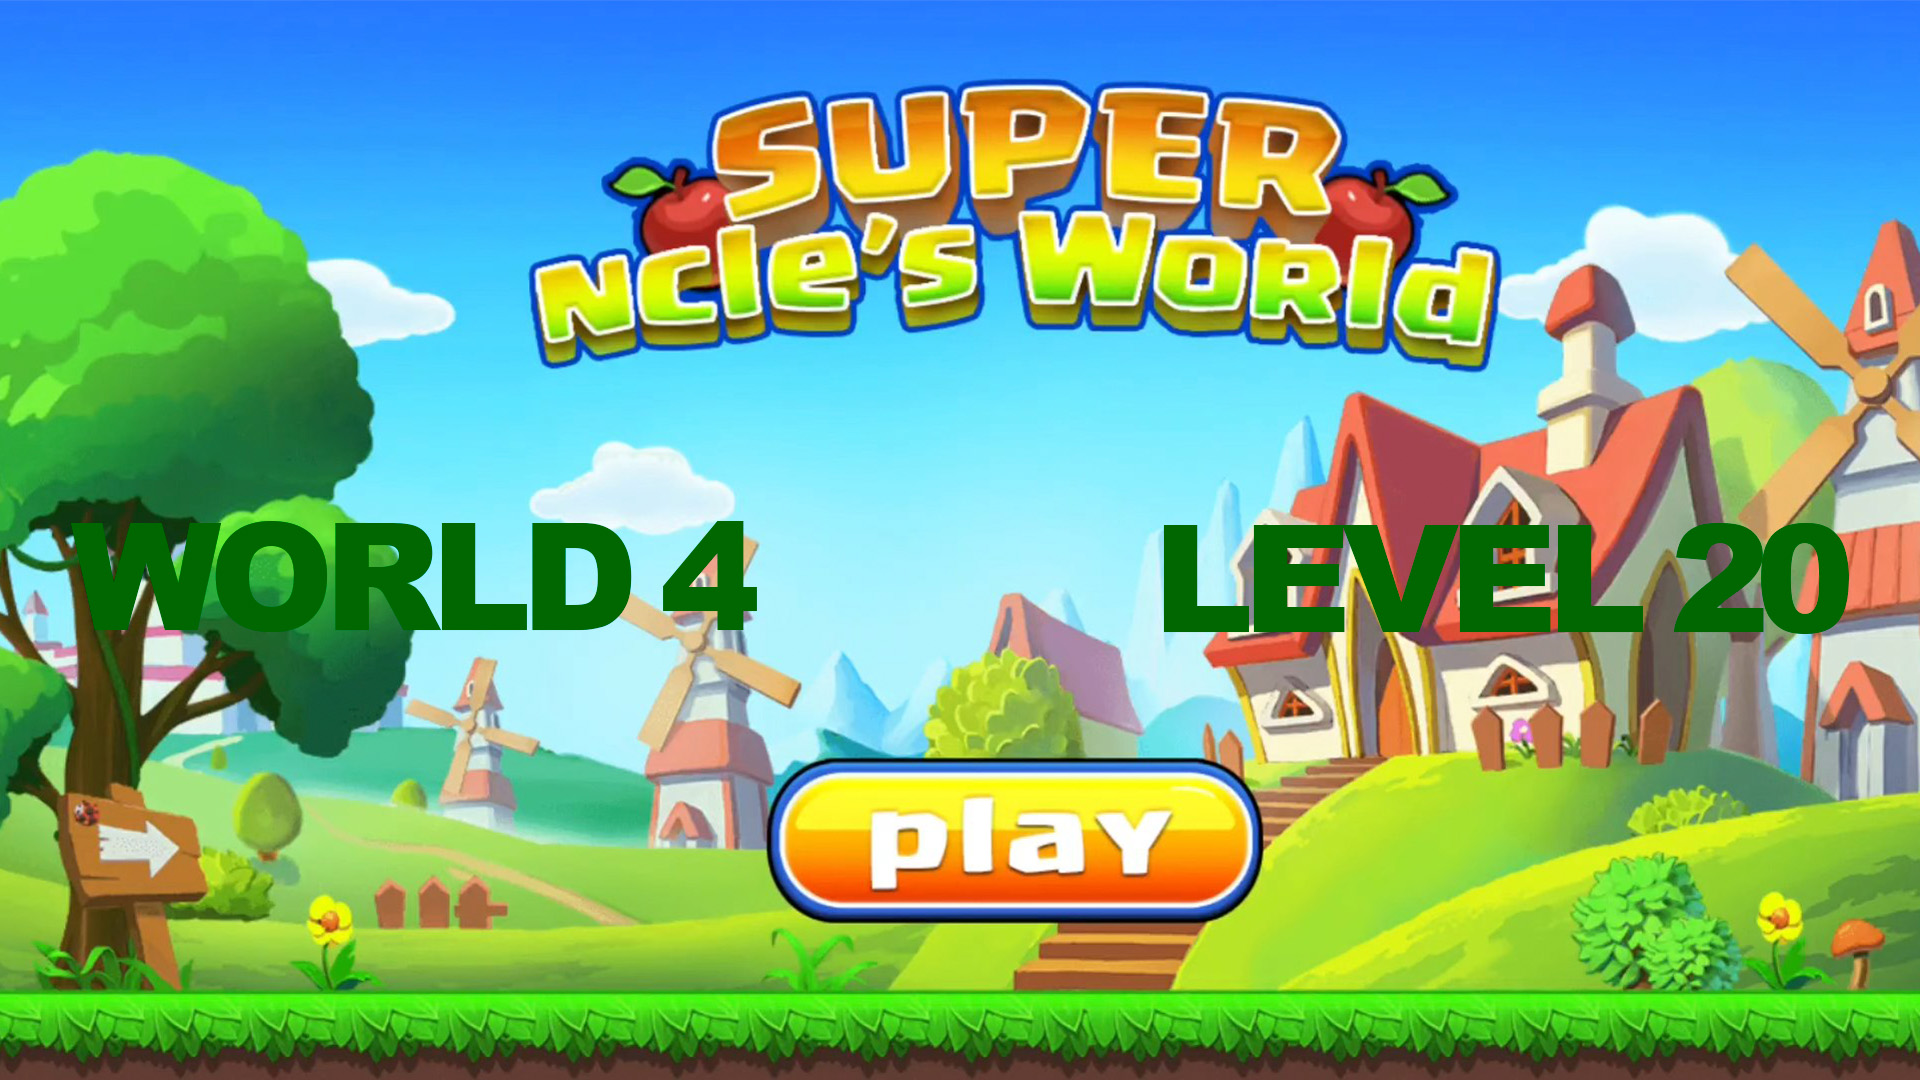 Super ncle's  World 4. Level 20.